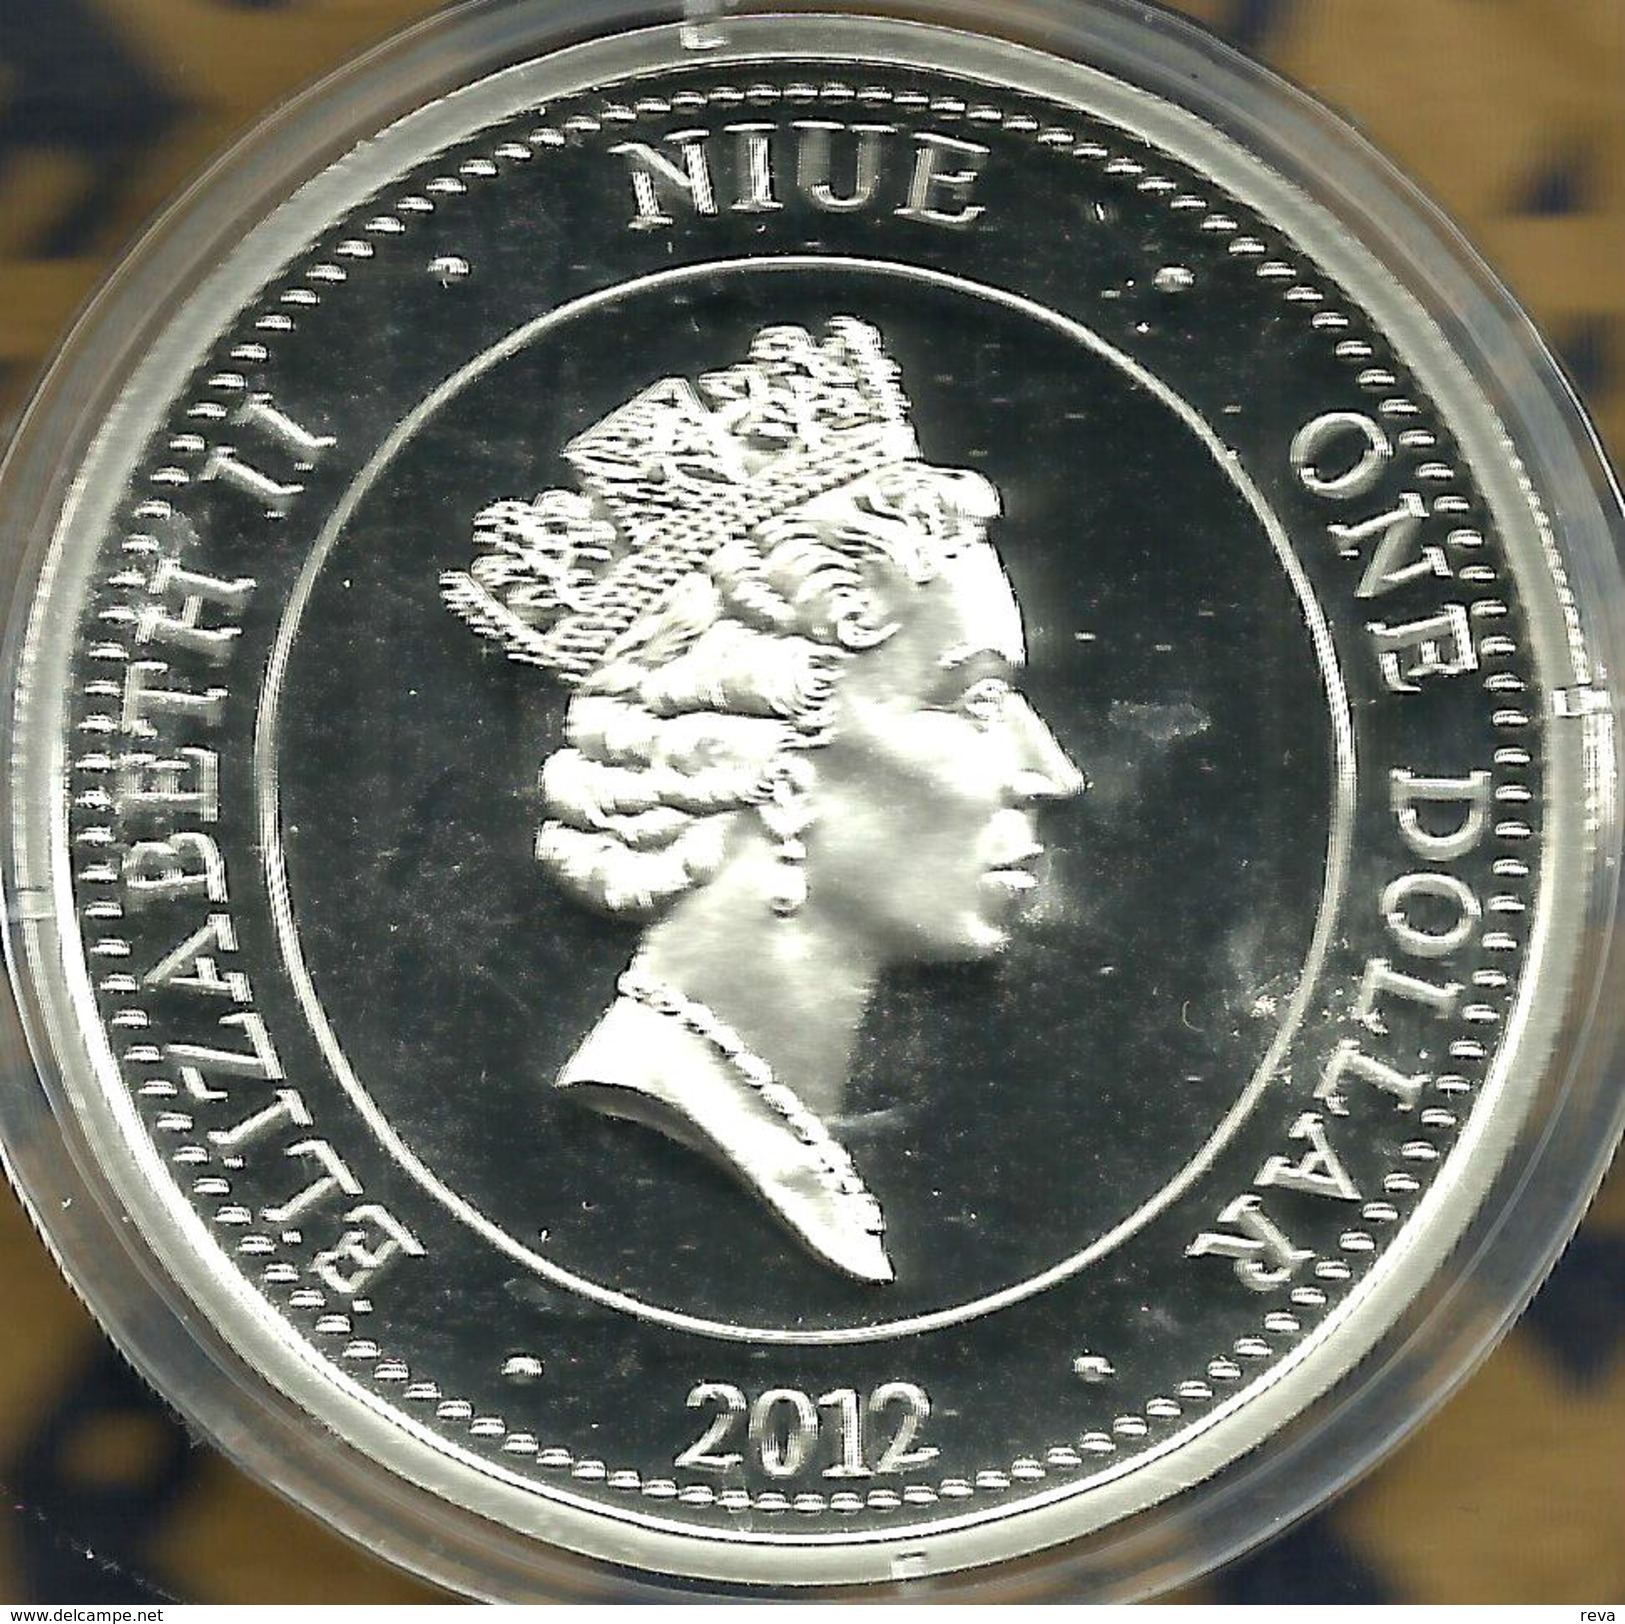 NIUE ISLAND $1 WWII BATTLE FOR AUSTRALIA COLOURED FRONT QEII HEAD BACK 2012 PROOF SILVER READDESCRIPTION CAREFULLY!!! - Niue